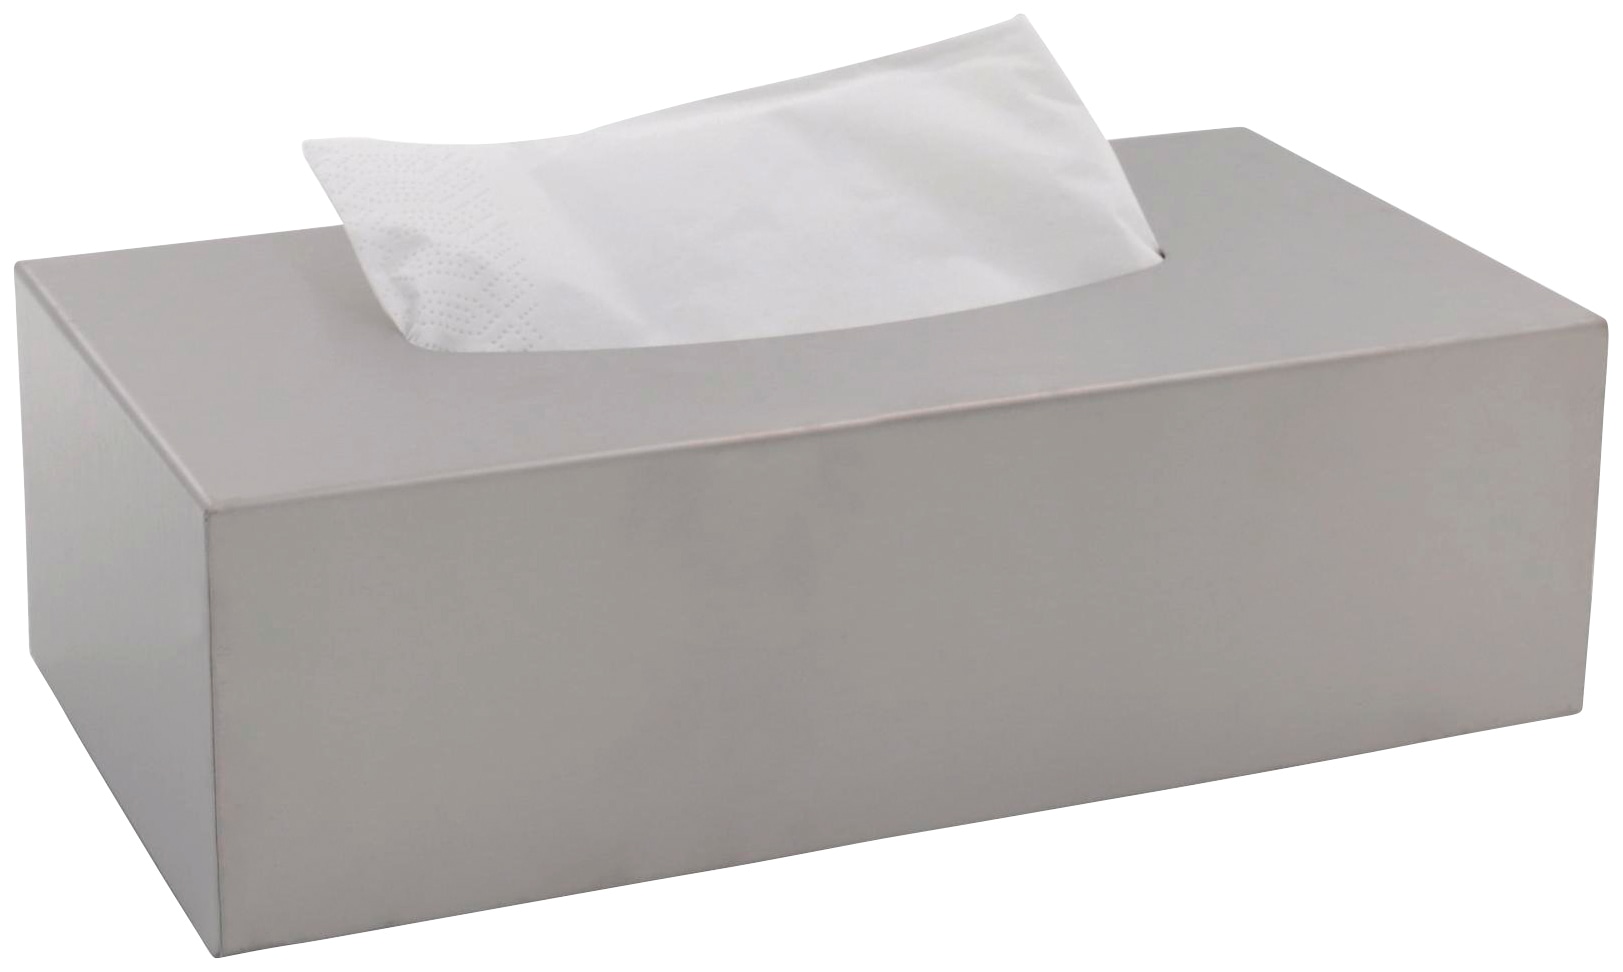 Ridder Papiertuchbox »Classic«, für Papiertücher